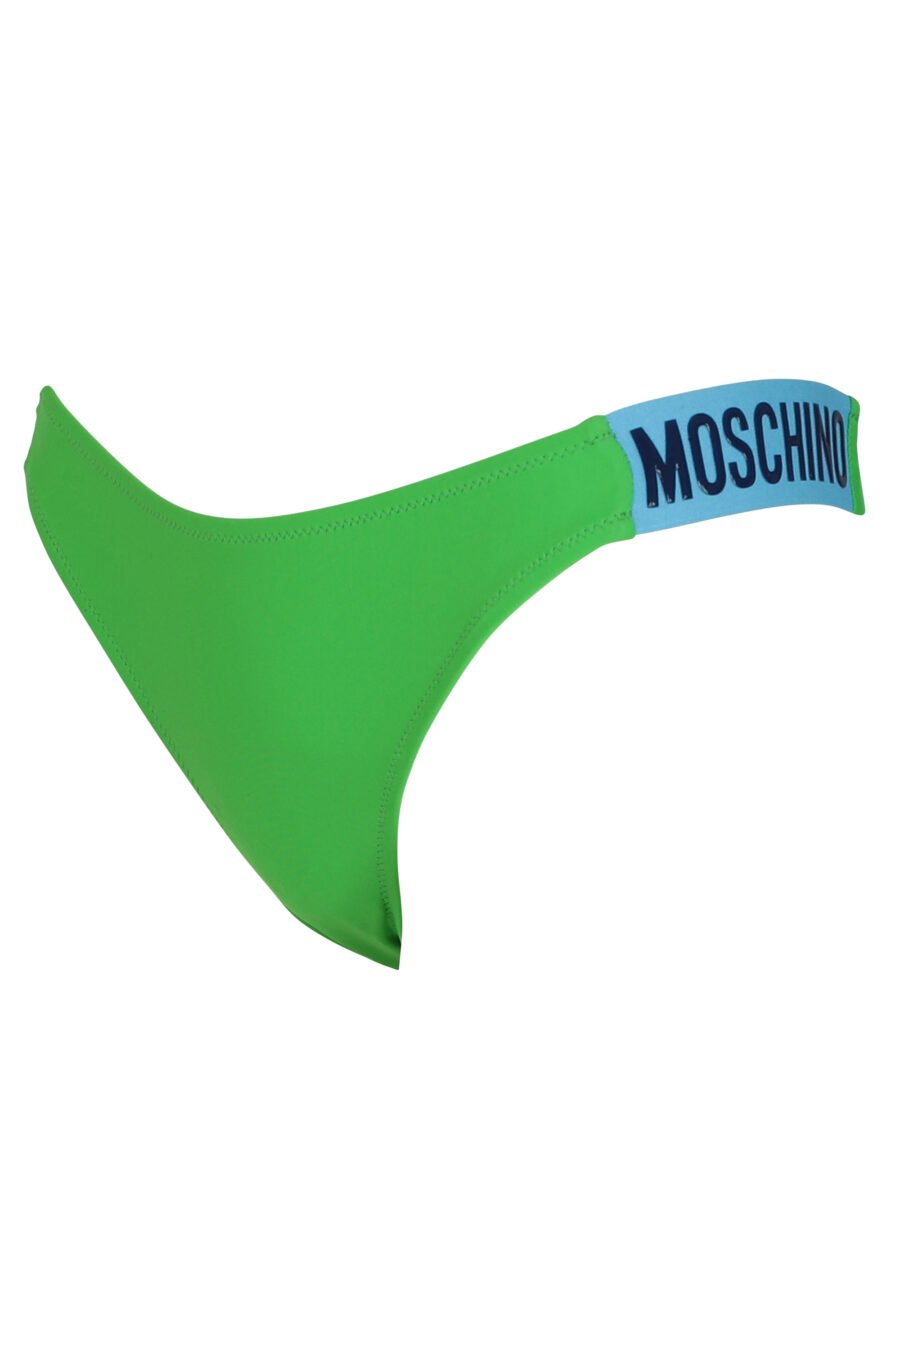 Bas de bikini vert avec logo sur la bande latérale - IMG 0313